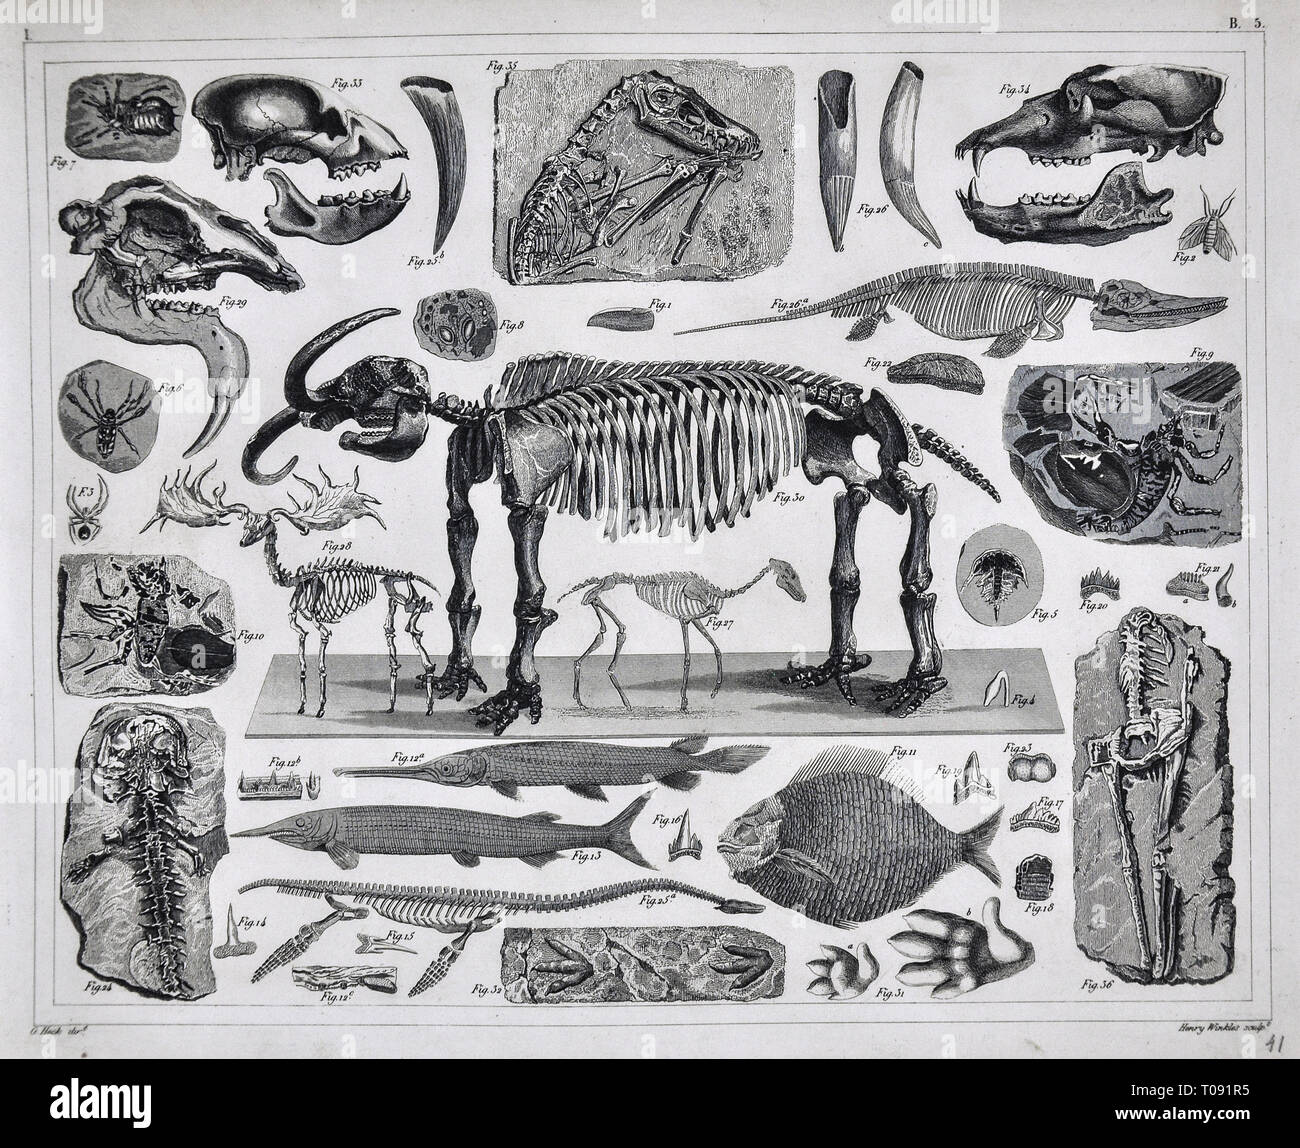 1849 Bilder Atlas Print - Prehistoric Fossils from the Cenozoic Pleistocene Period including Mastodon, Saber Tooth Tiger, Arachnids, Fish and other Extinct Species Stock Photo